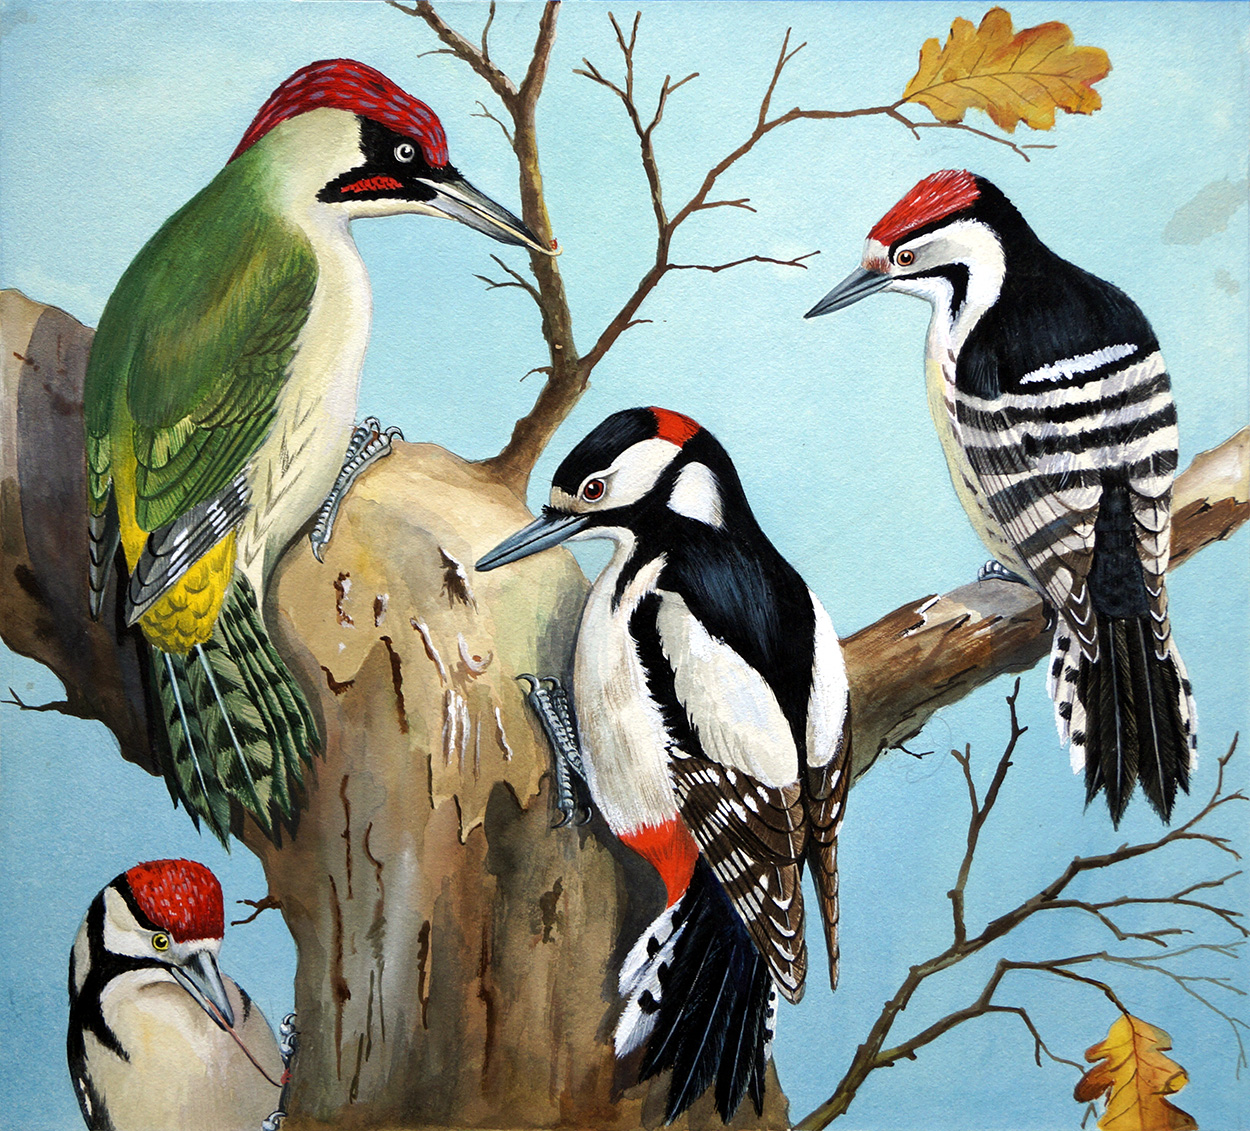 Four Woodpeckers (Original) art by John Rignall Art at The Illustration Art Gallery